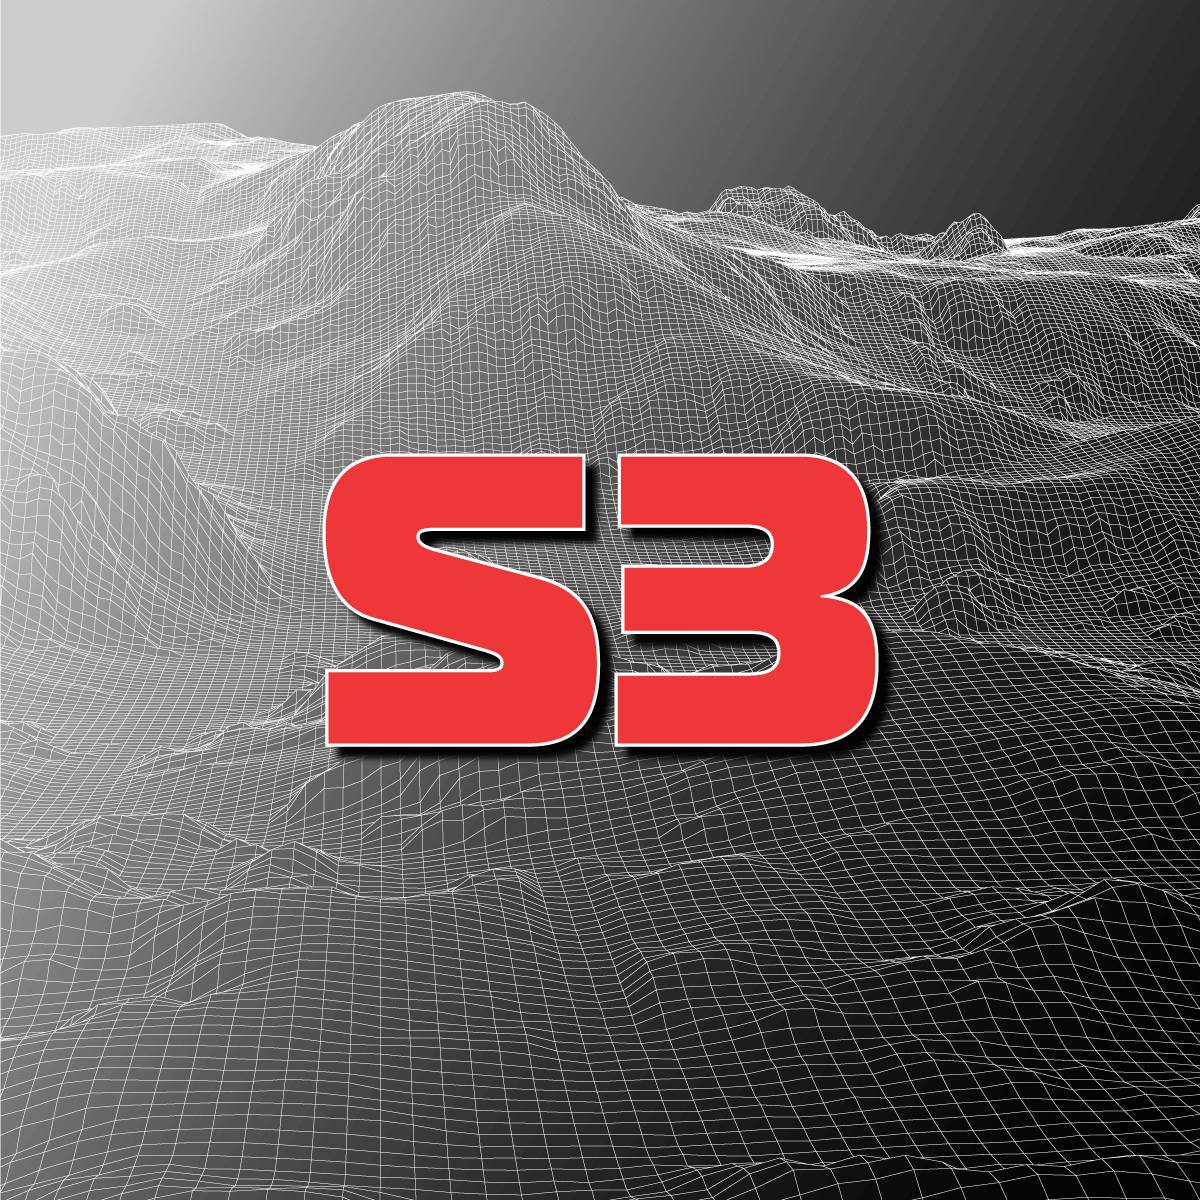 s3 icon